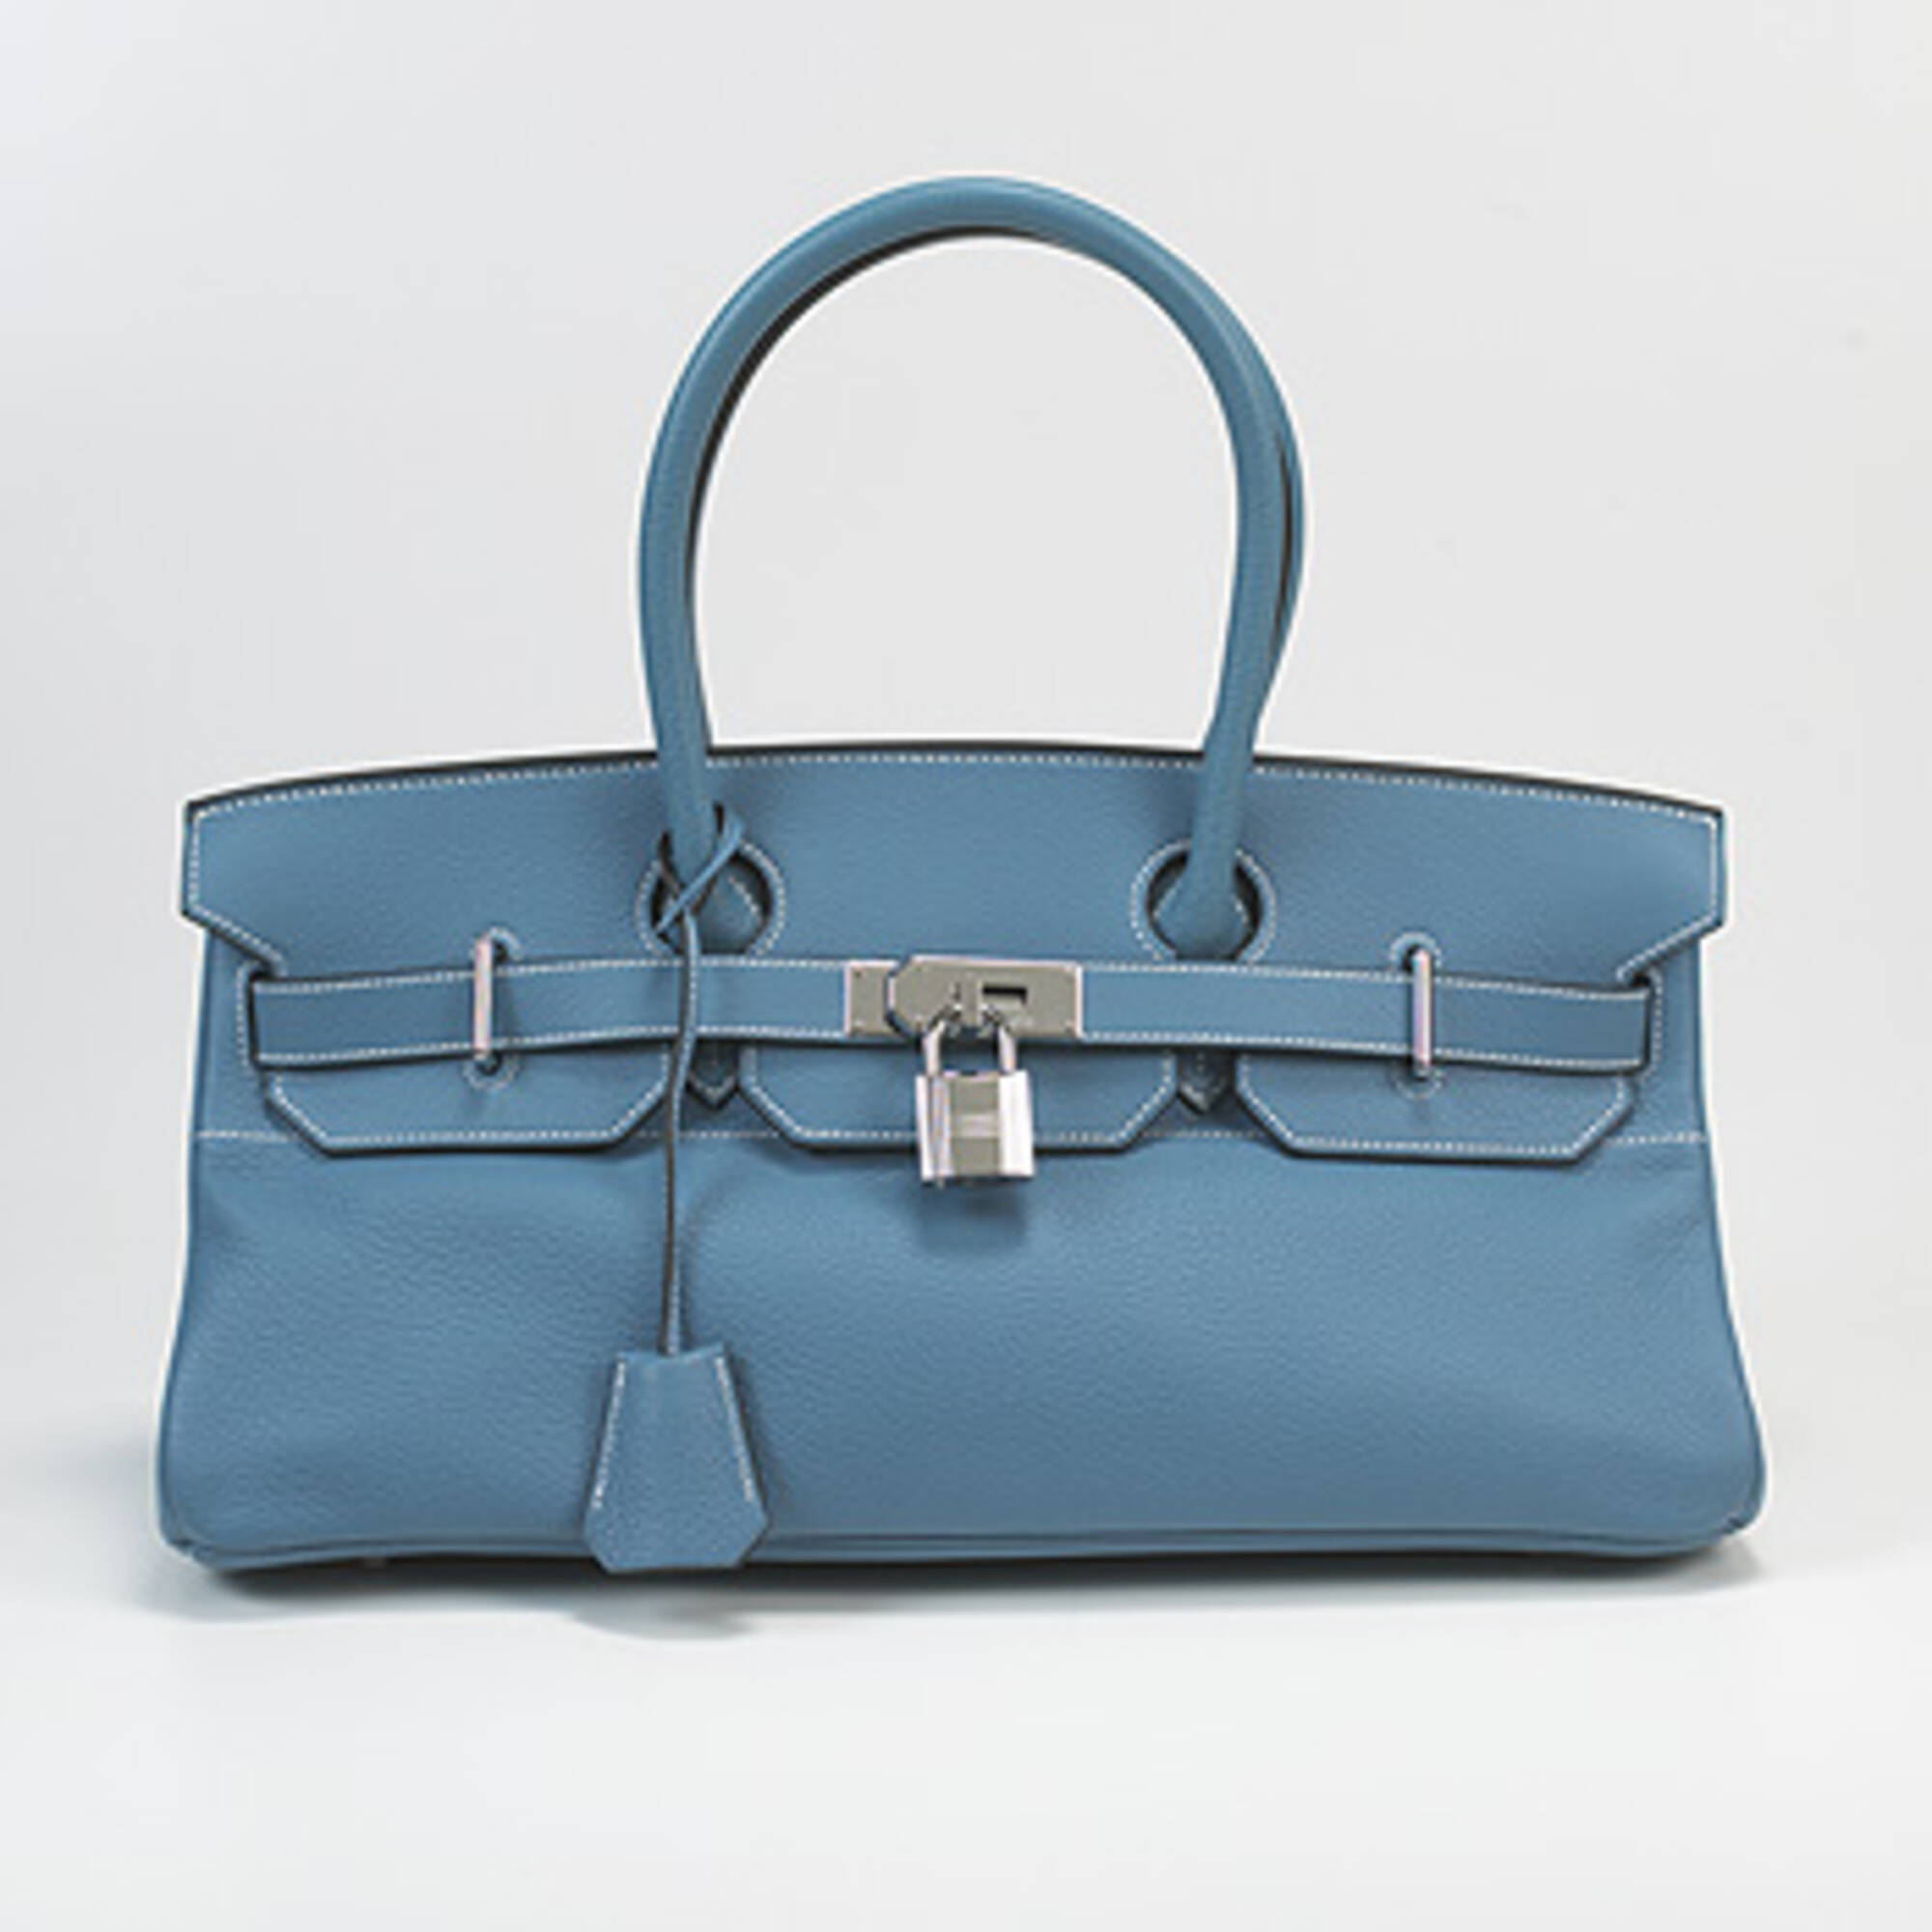 HERMES, Birkin handbag \u003c Branded Luxury 